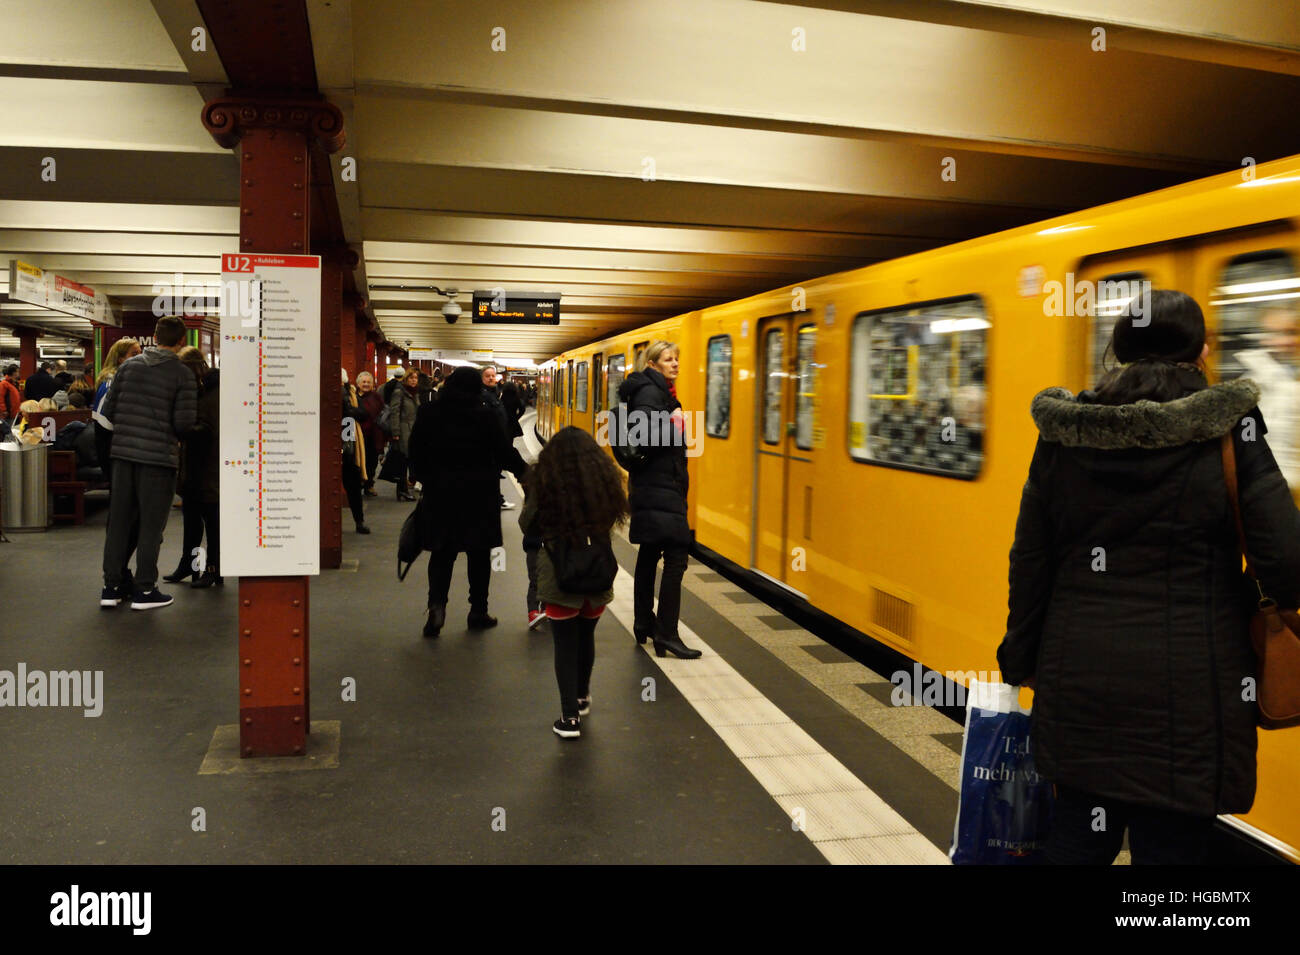 U-Bahn train arriving at Alexanderplatz train station, Berlin, Germany Stock Photo